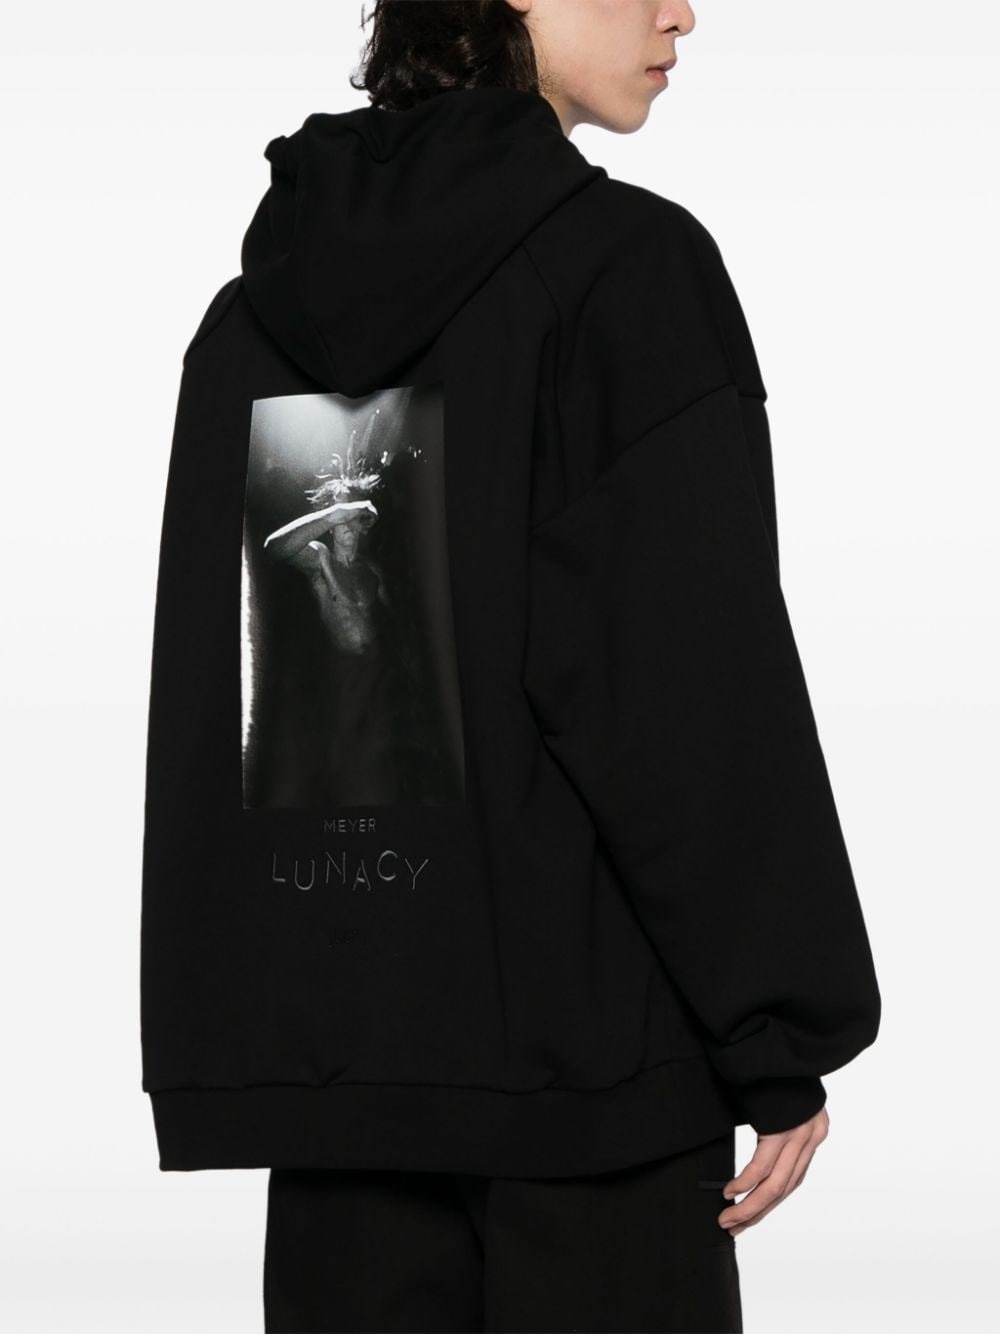 'Meyer Lunacy' graphic-print cotton hoodie - 4